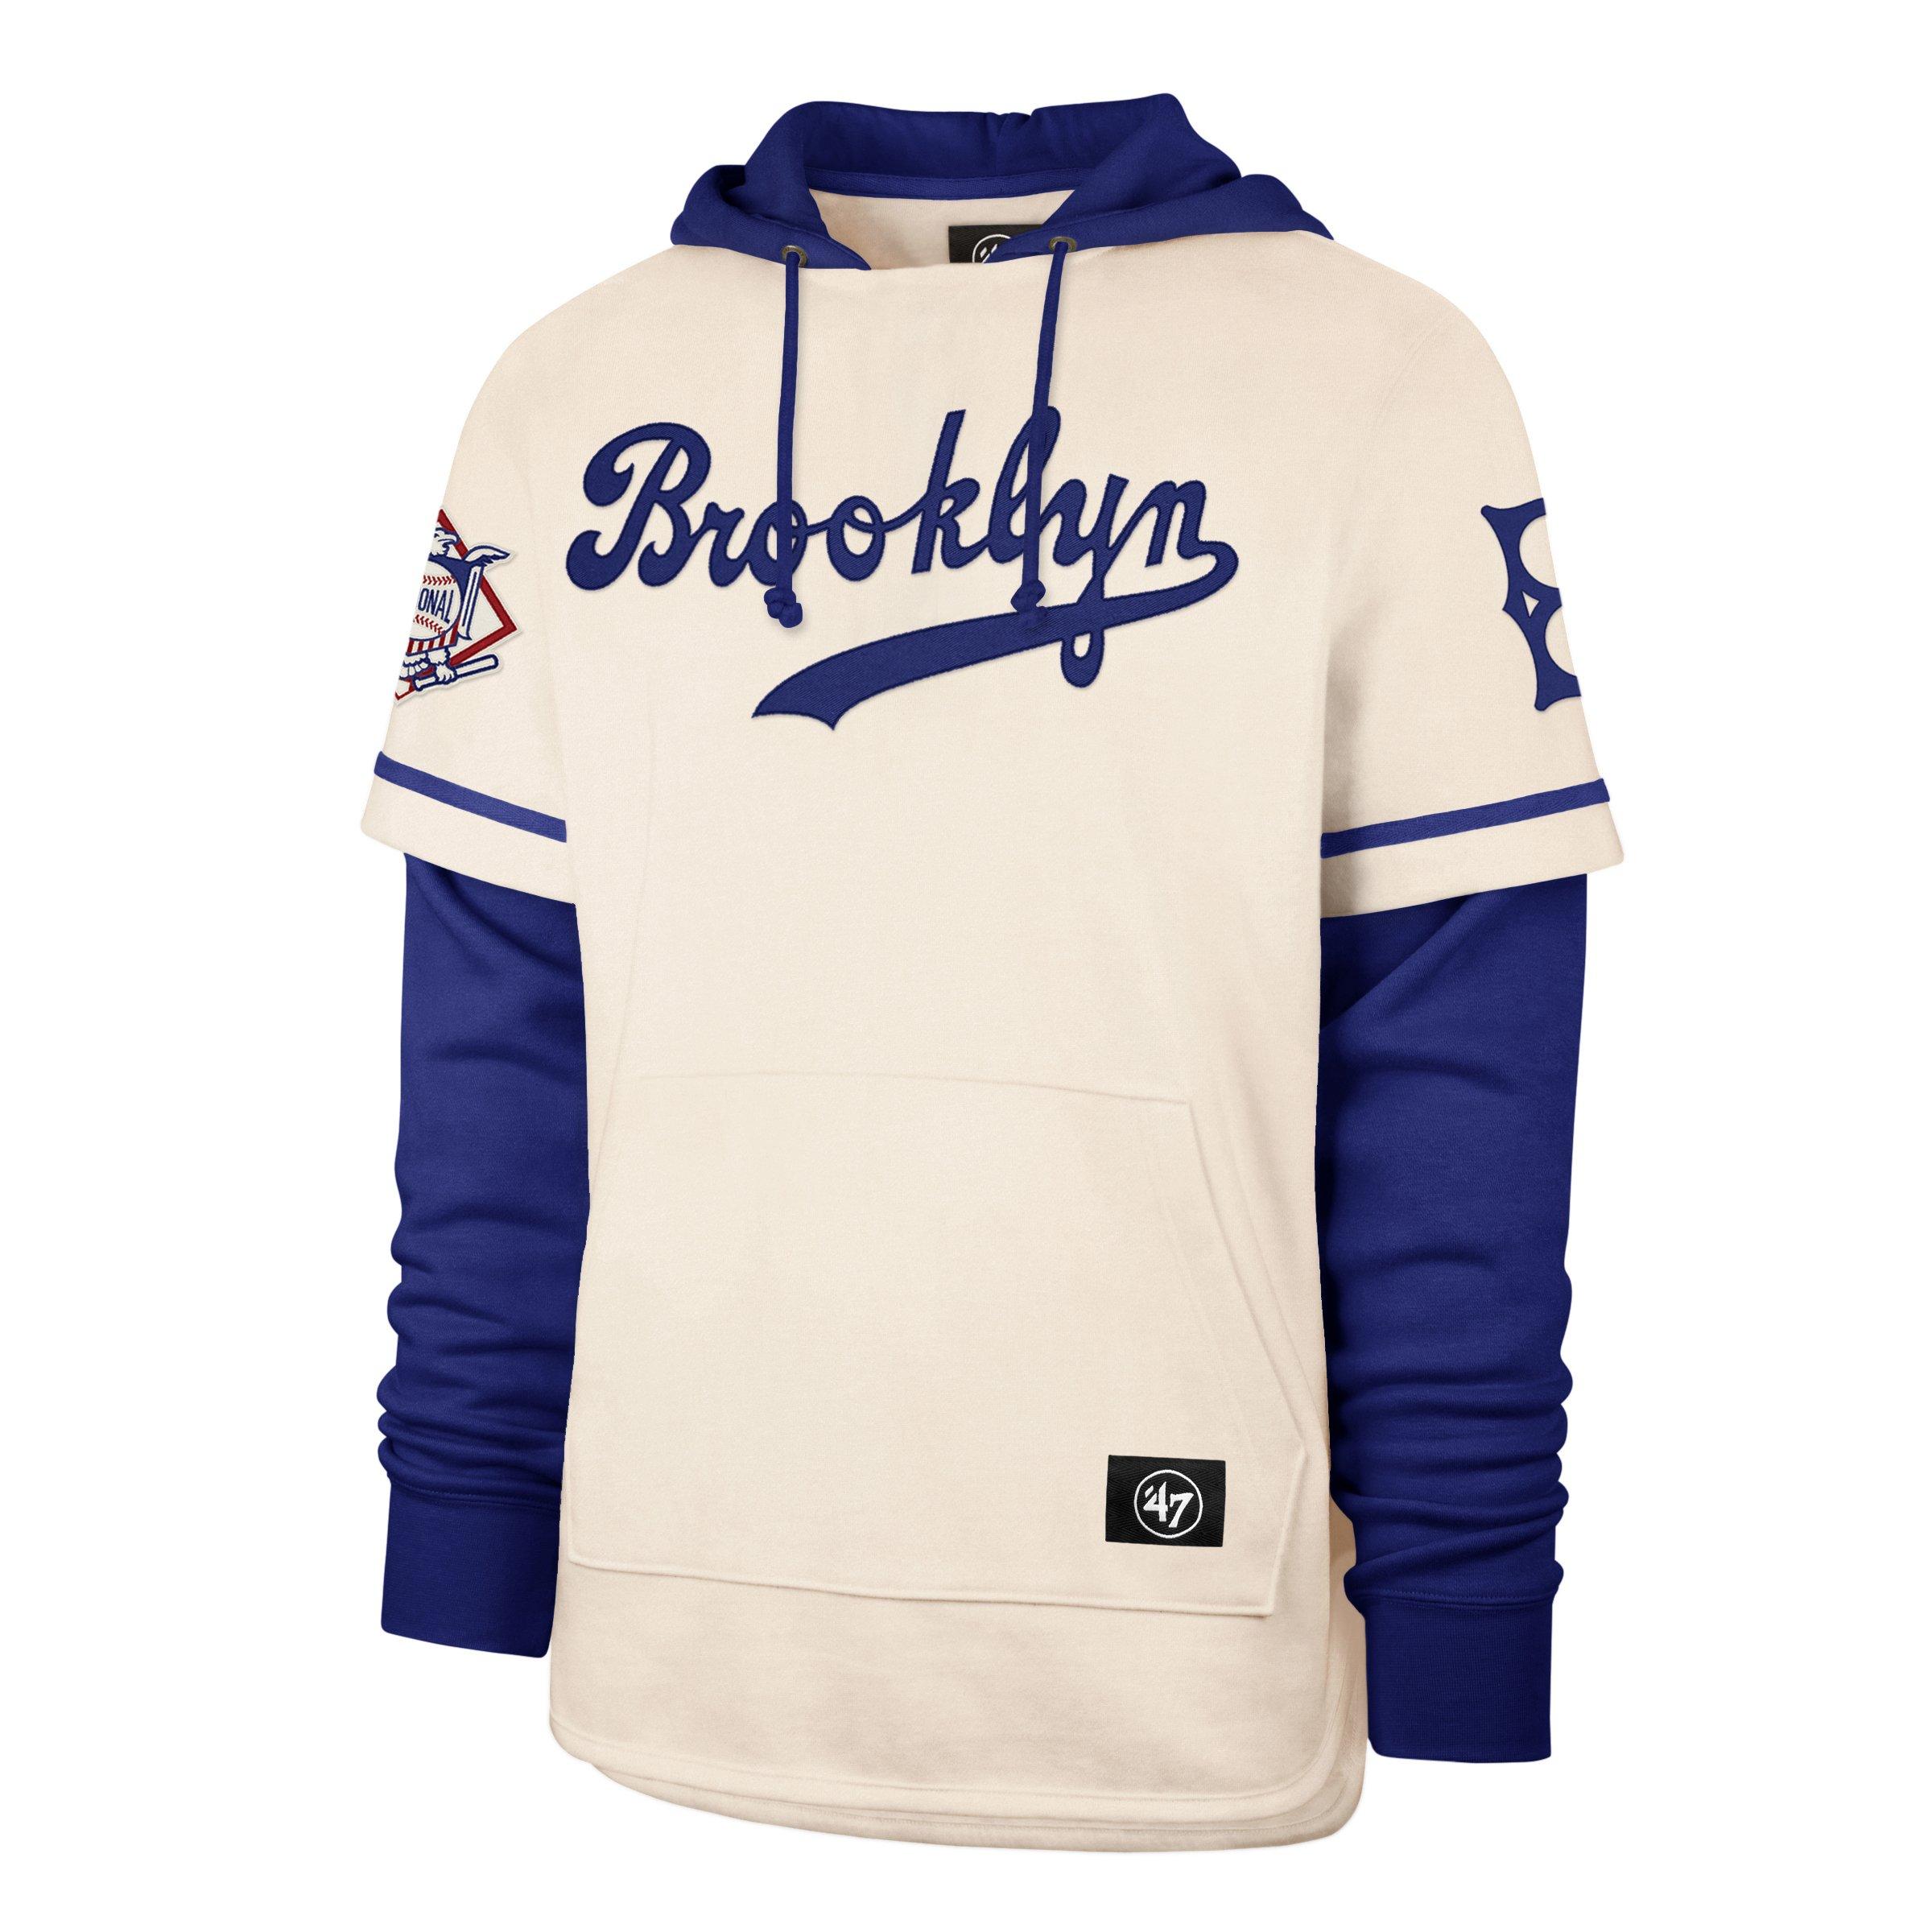 Nike Rewind Warm Up (MLB Brooklyn Dodgers) Men's Pullover Jacket